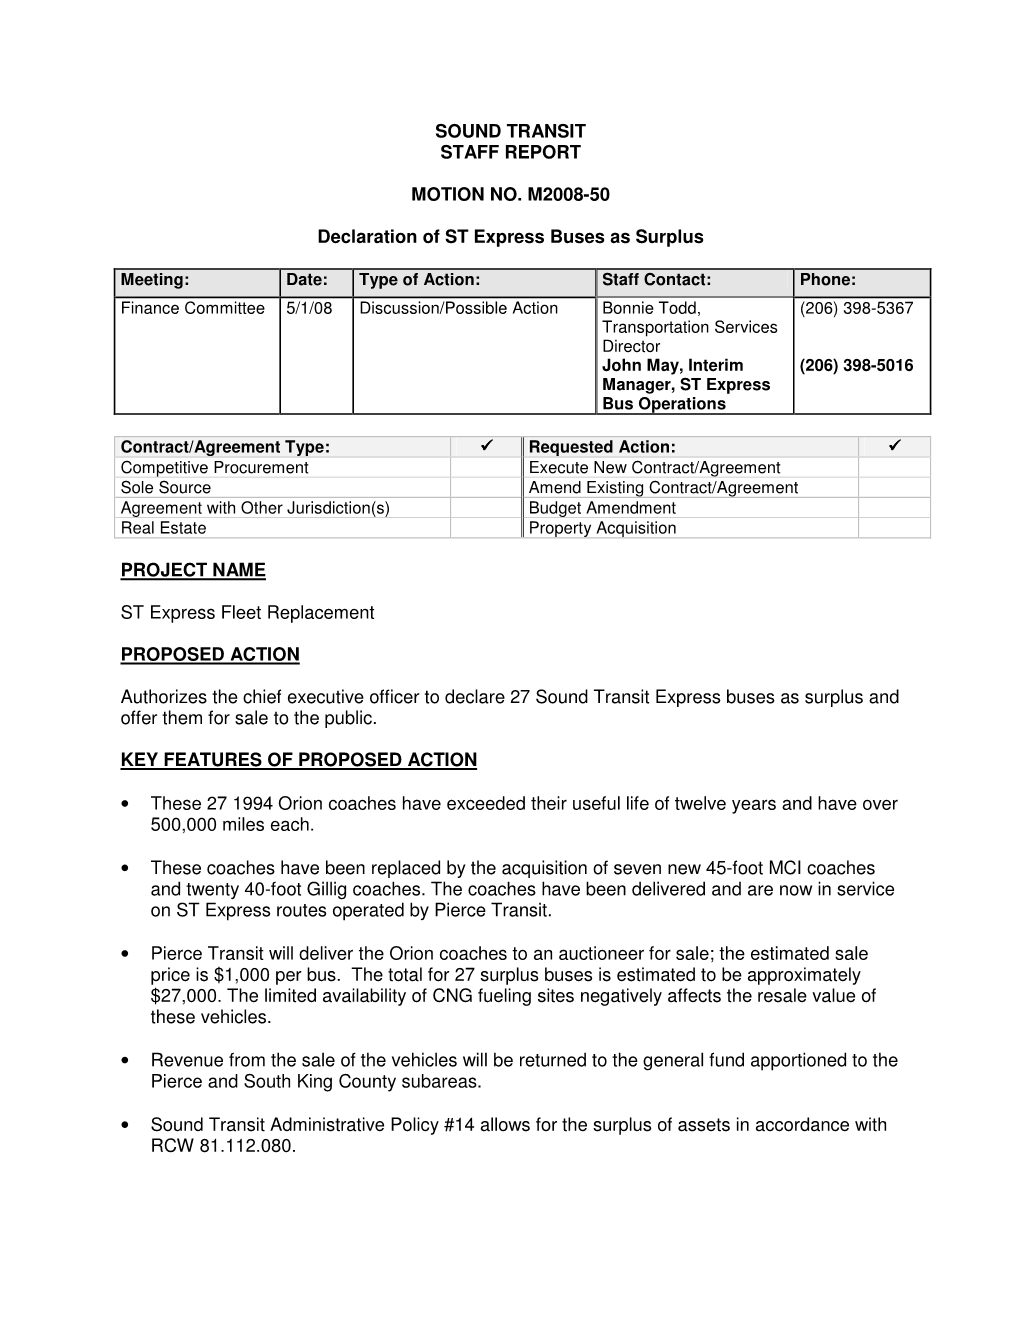 Sound Transit Staff Report Motion No. M2008-50